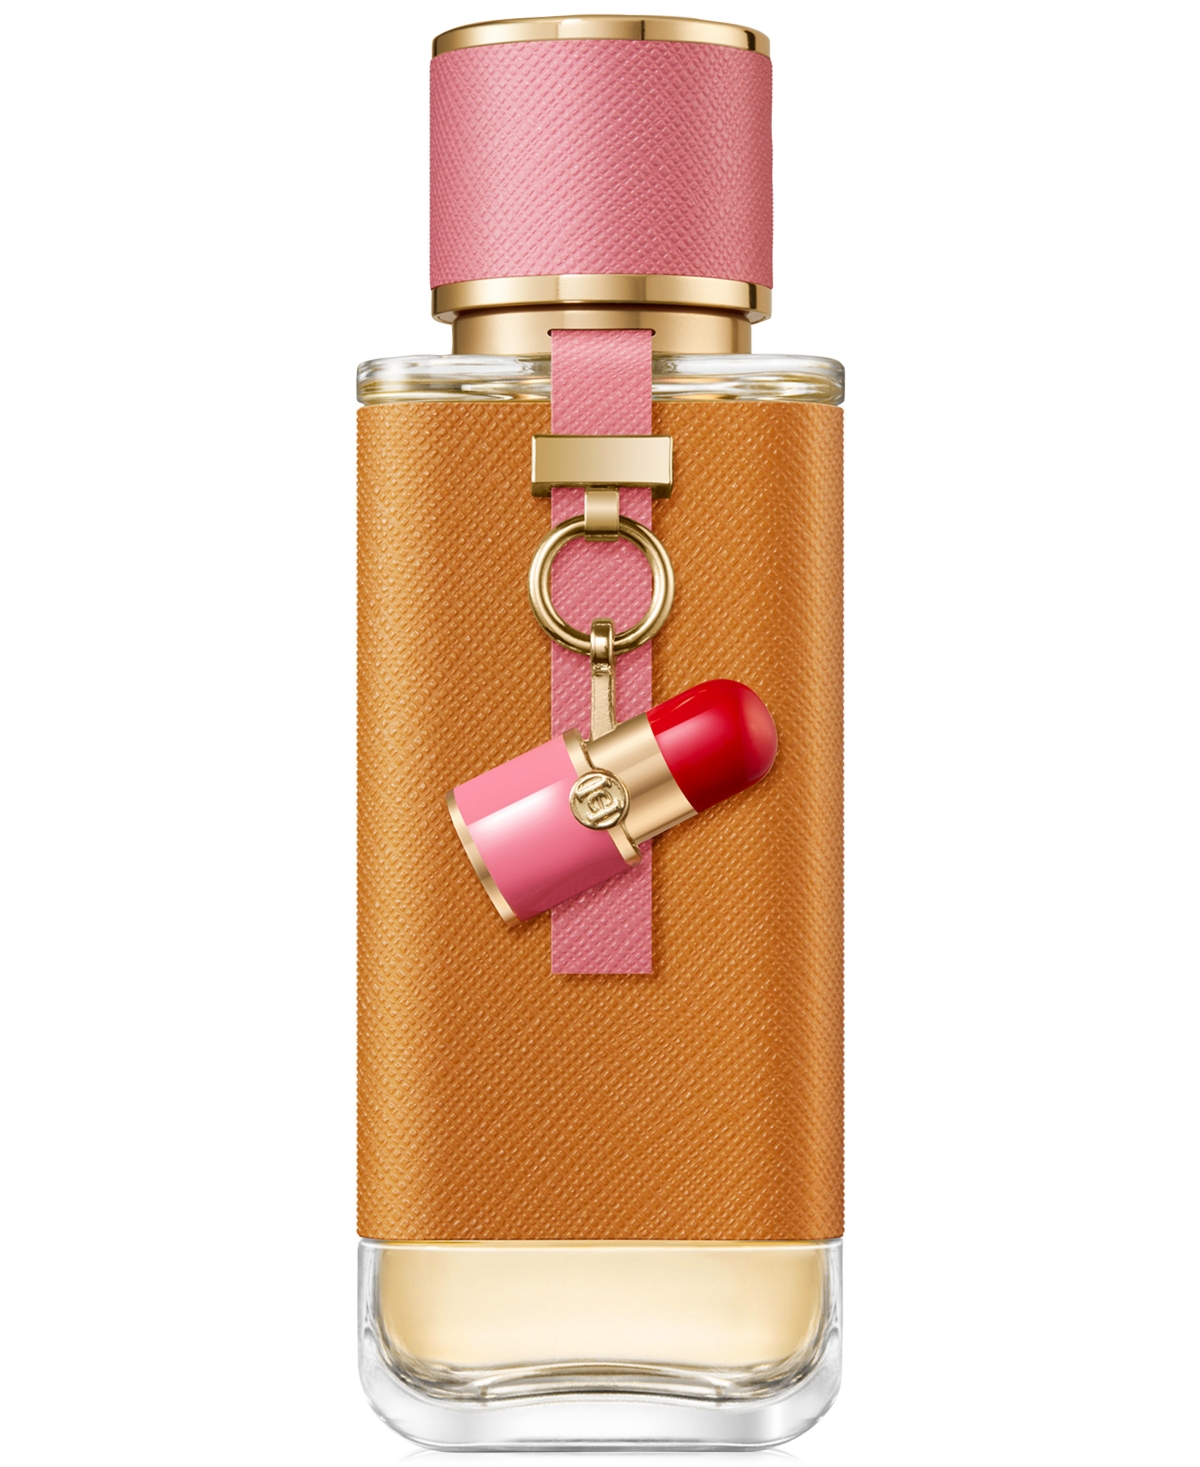  Carolina Herrera Good Girl Blush Eau de Parfum Rollerball 0.34  oz / 10 mL eau de parfum rollerball : Beauty & Personal Care